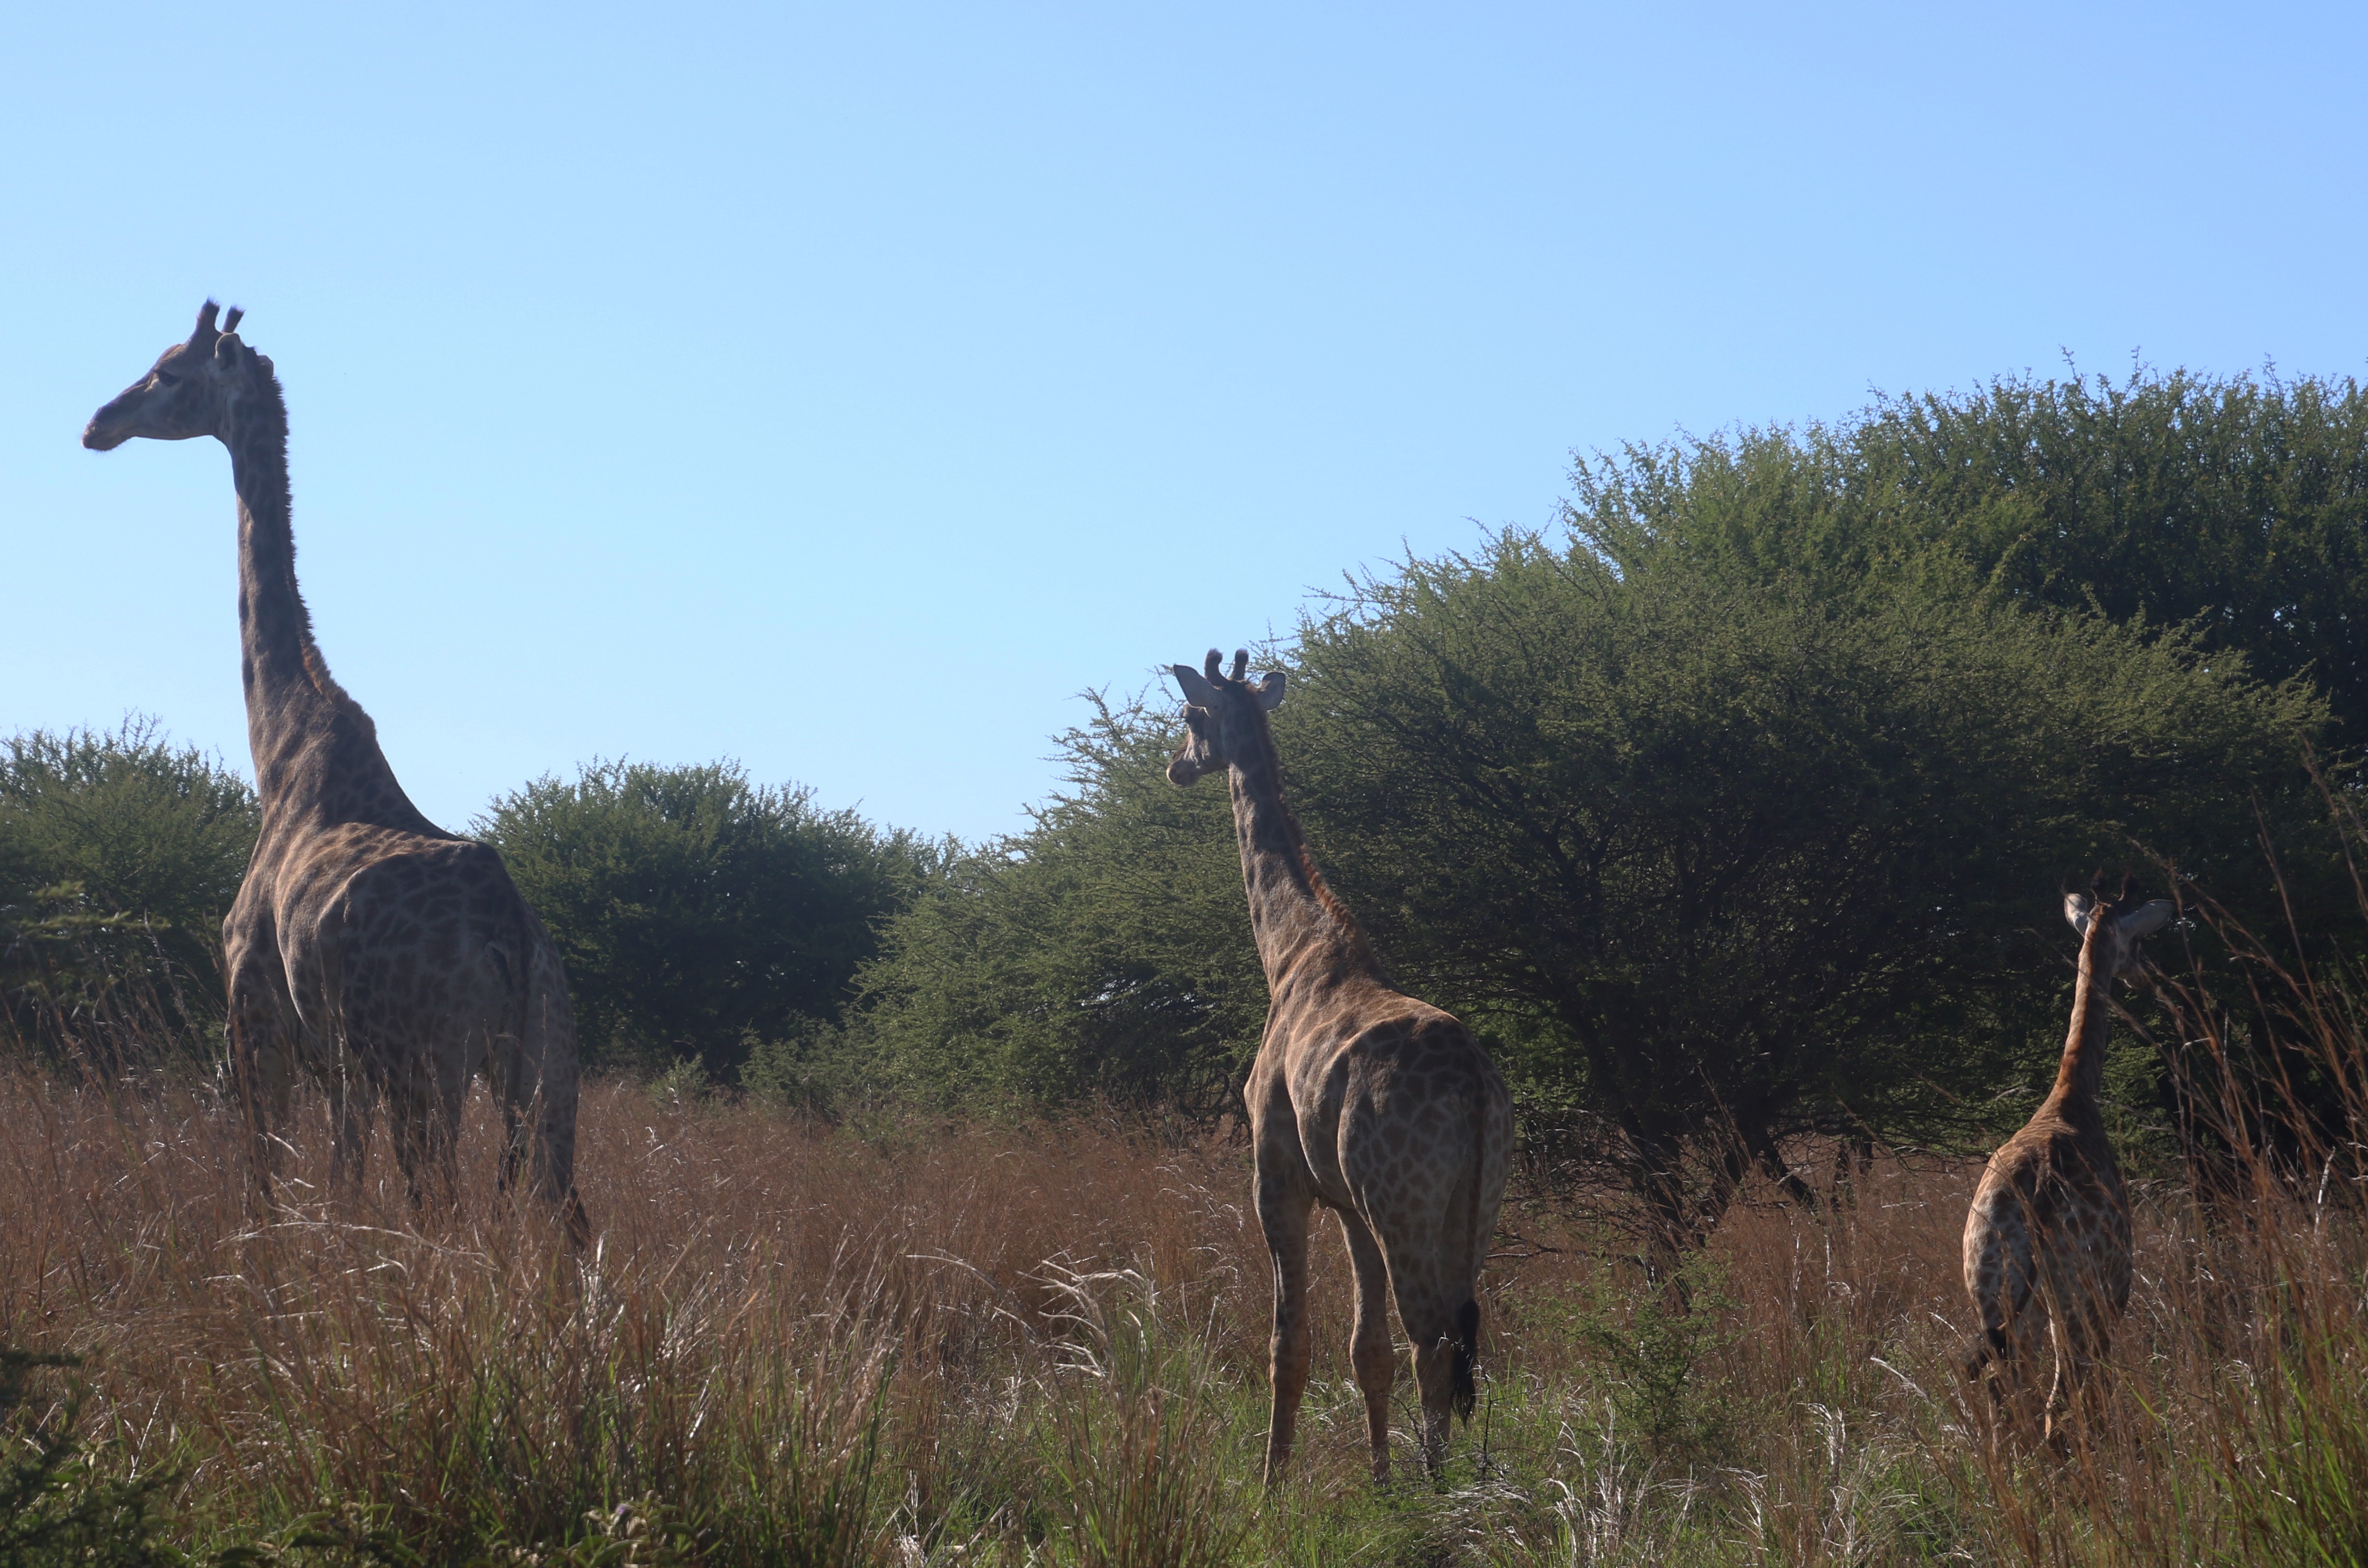 Photo of Giraffes on the Field, Animals, Park, Wildlife, Wilderness, HQ Photo